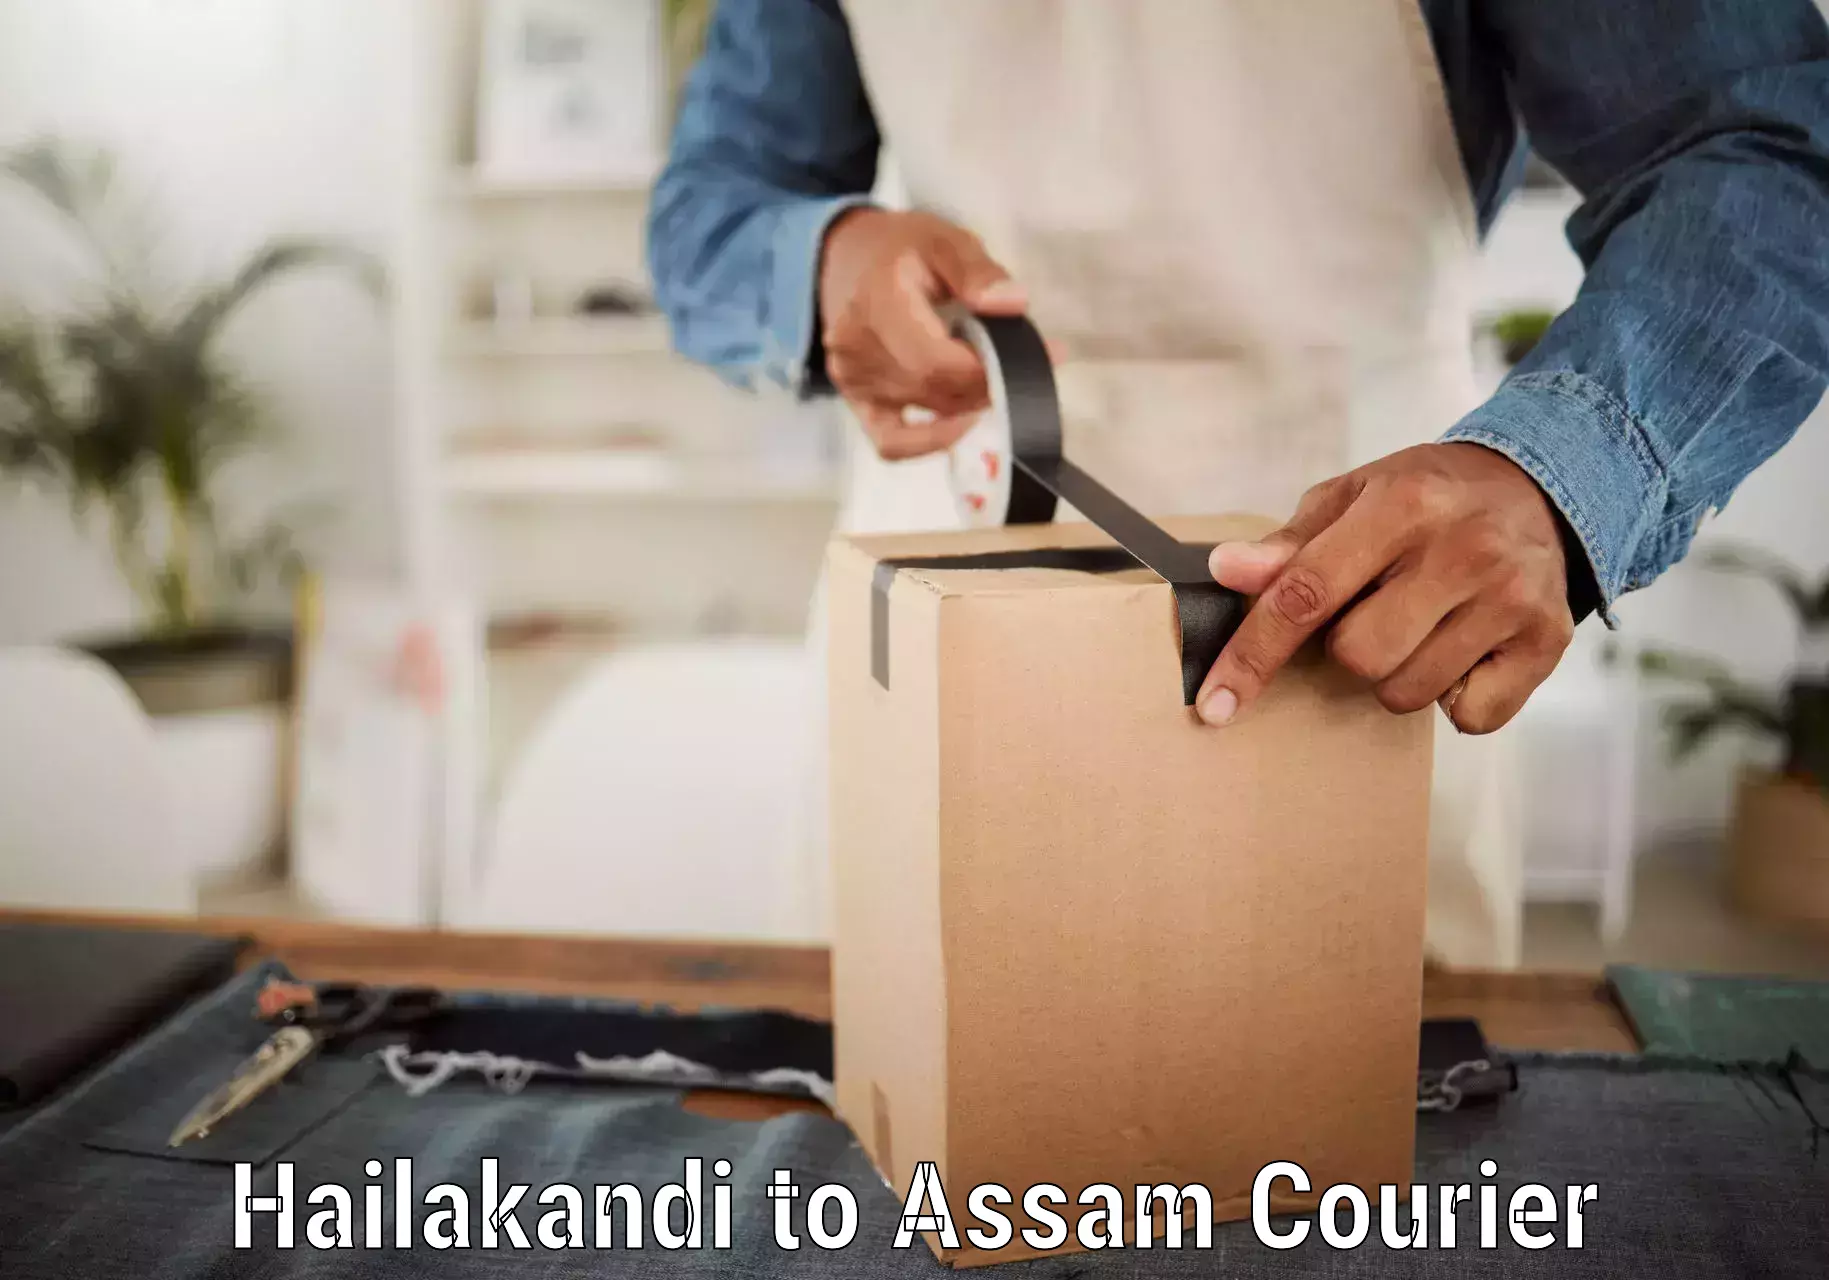 Professional courier handling Hailakandi to Jagiroad